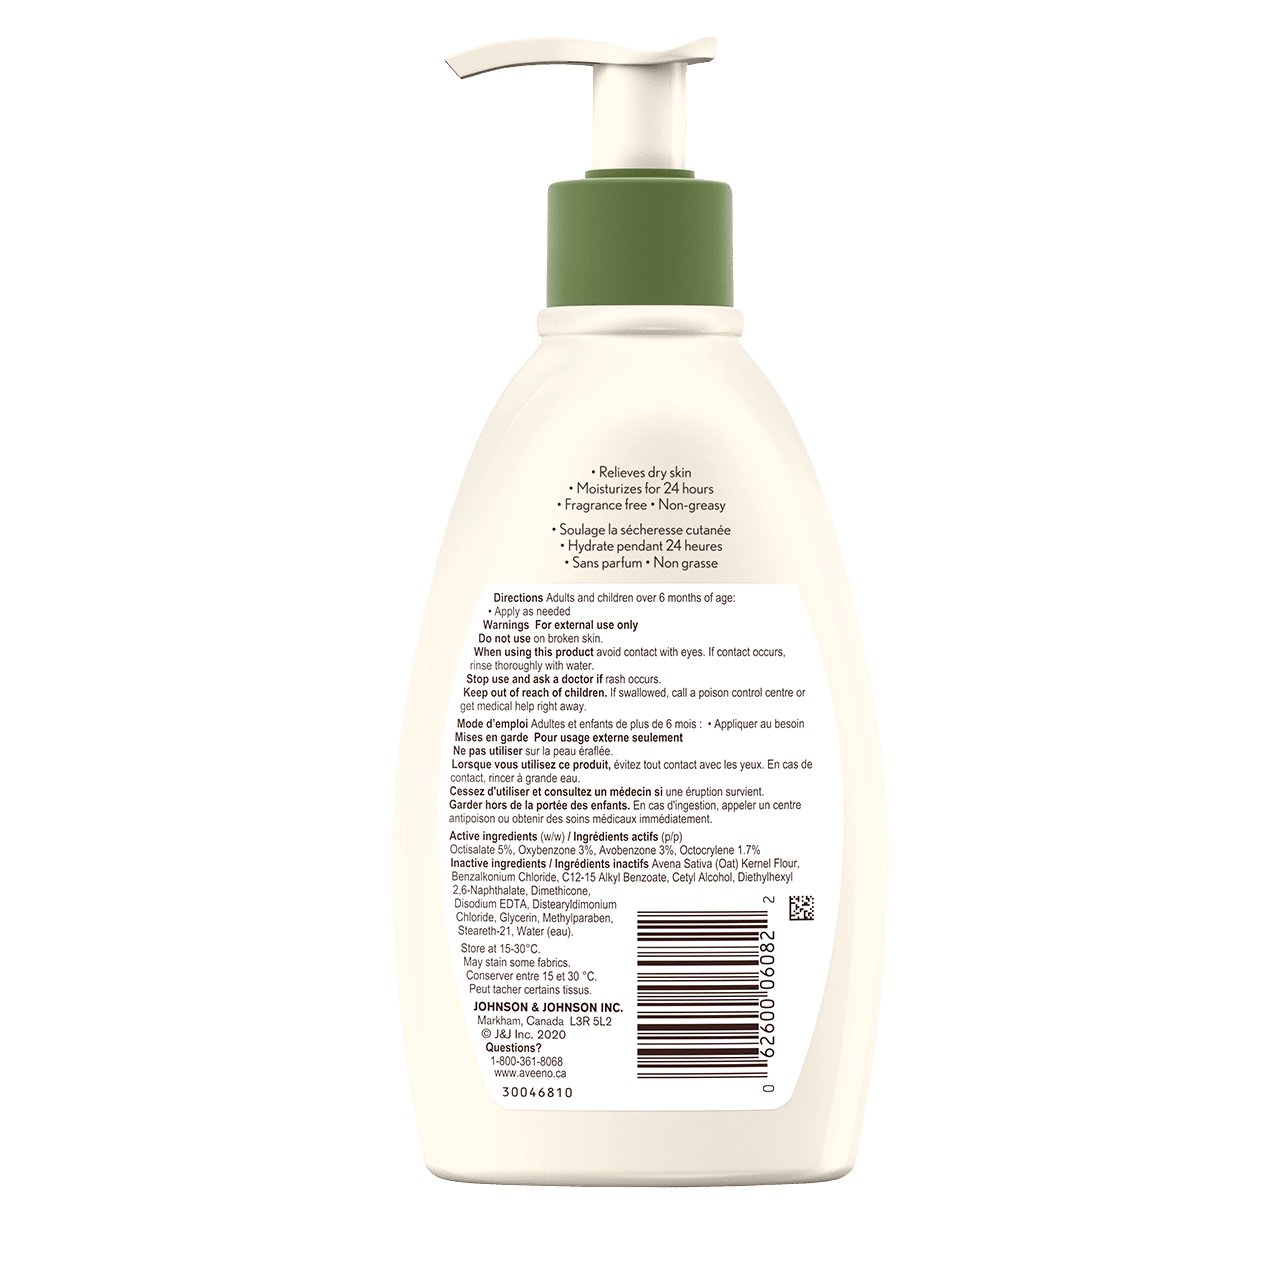 AVEENO® Daily Moisturizing Lotion SPF 15, 354ml pump bottle, back label